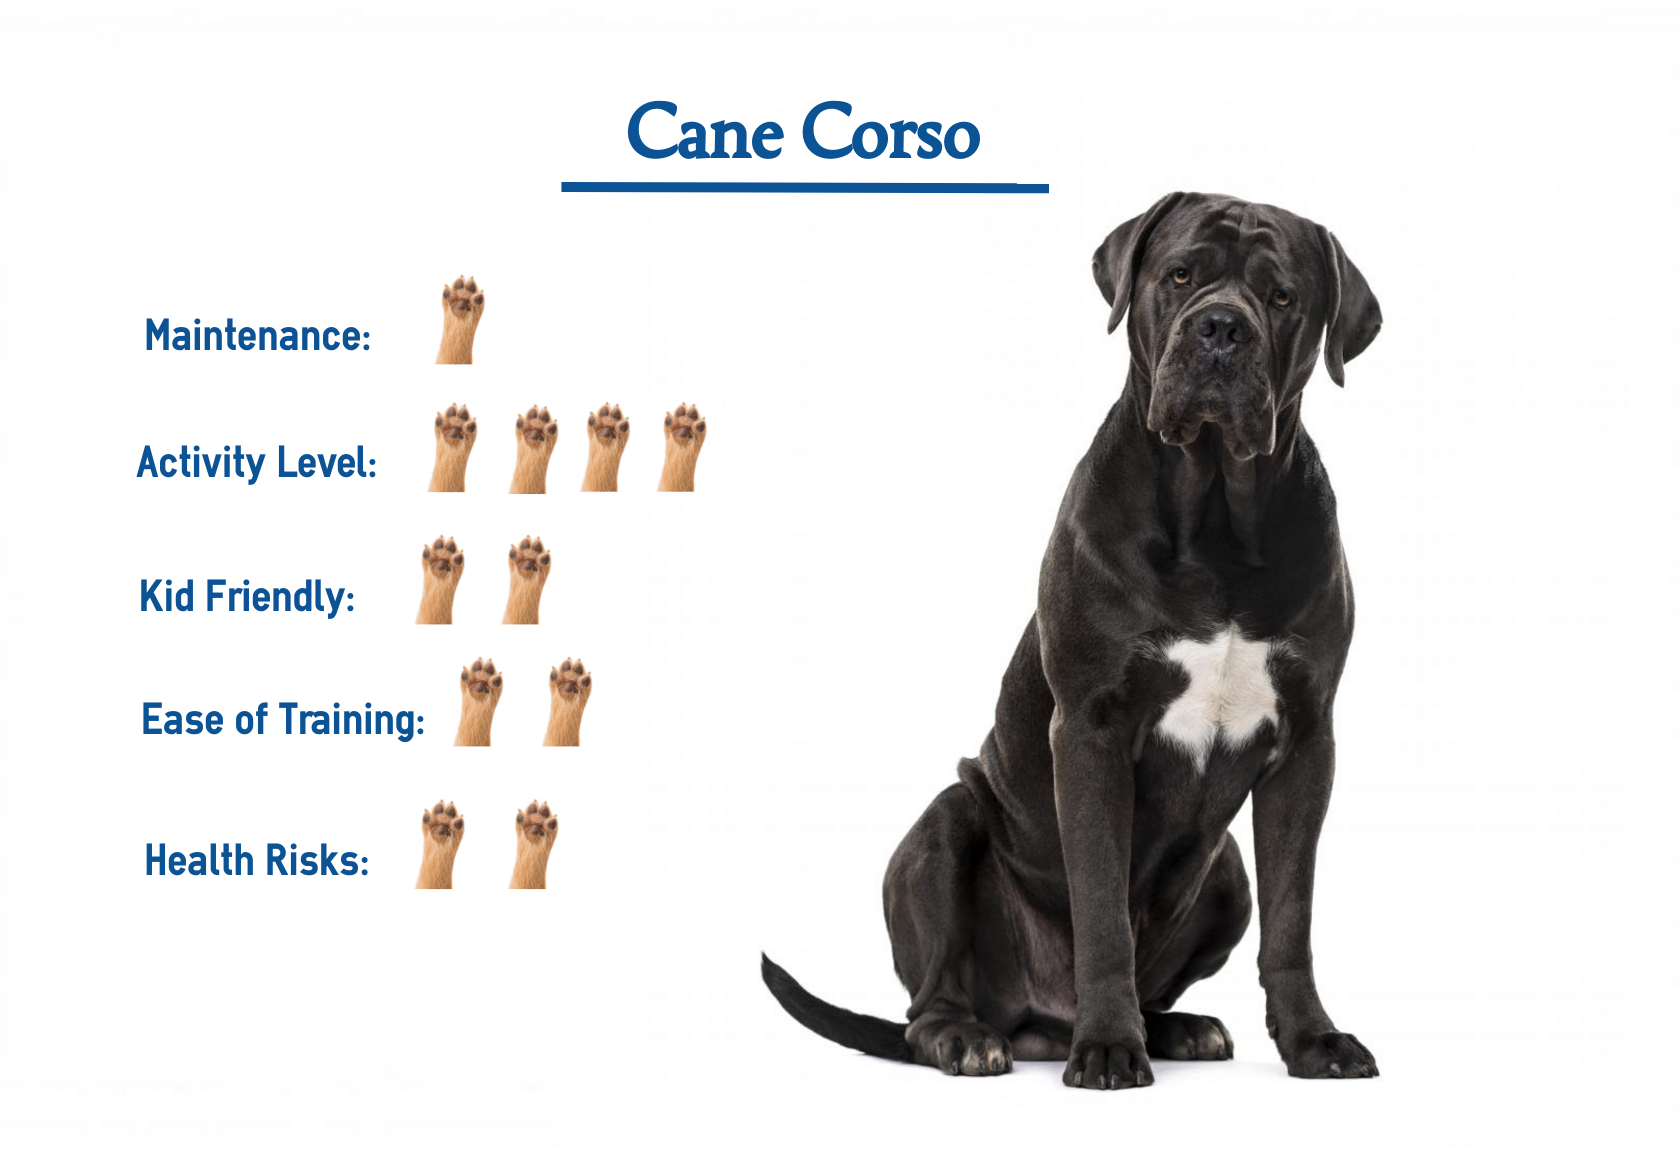 do cane corsos make good service dogs